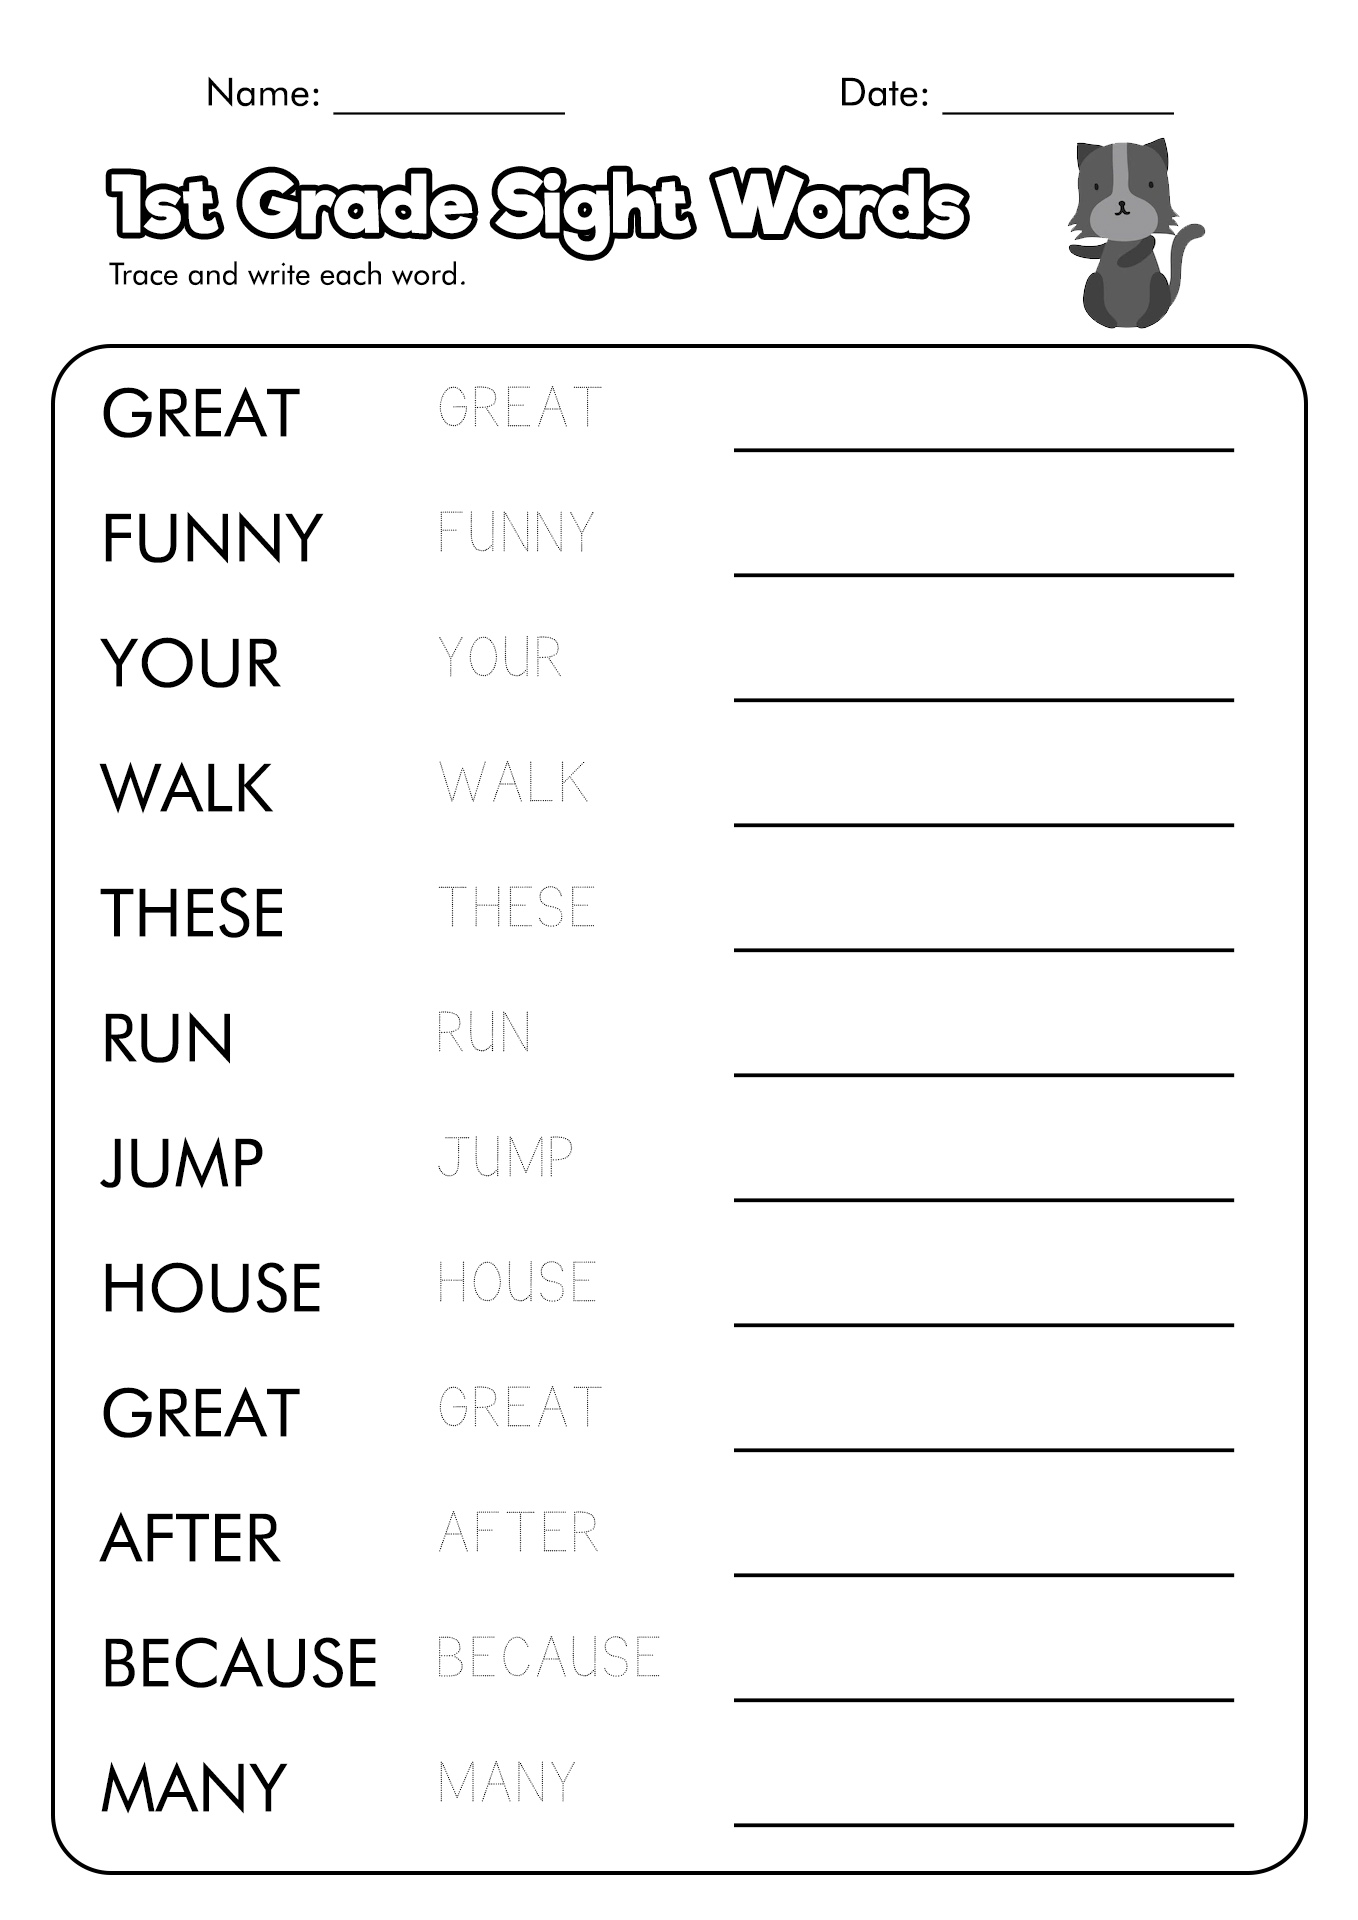 sight word worksheets 1st grade crossword